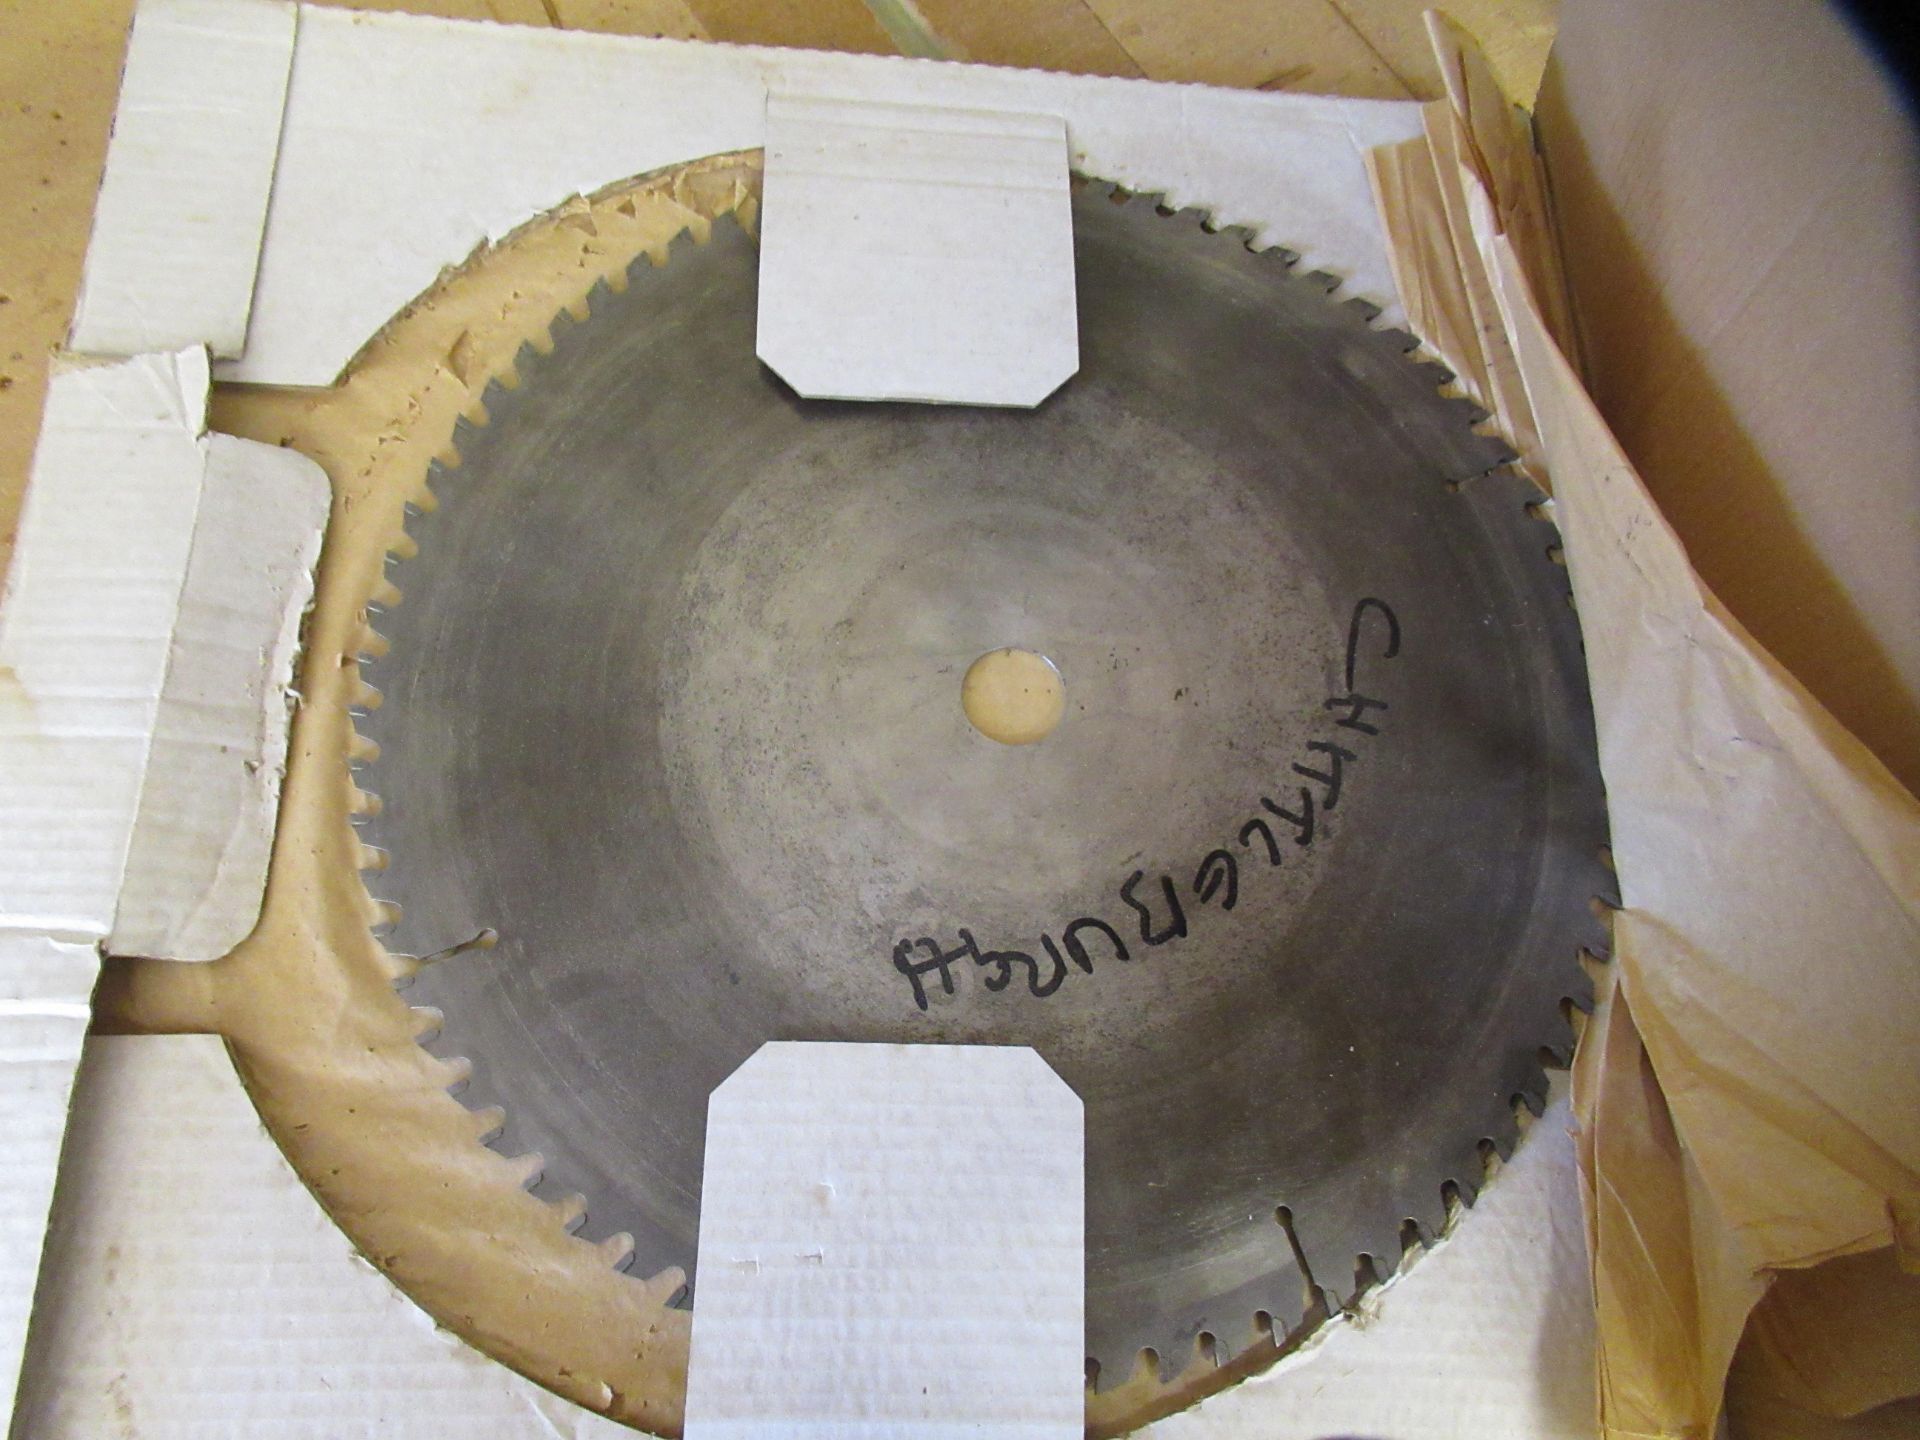 Maggi cross cut saw, 3Kw, Max 400mm diameter, 700mm cutting lengths - Image 7 of 8